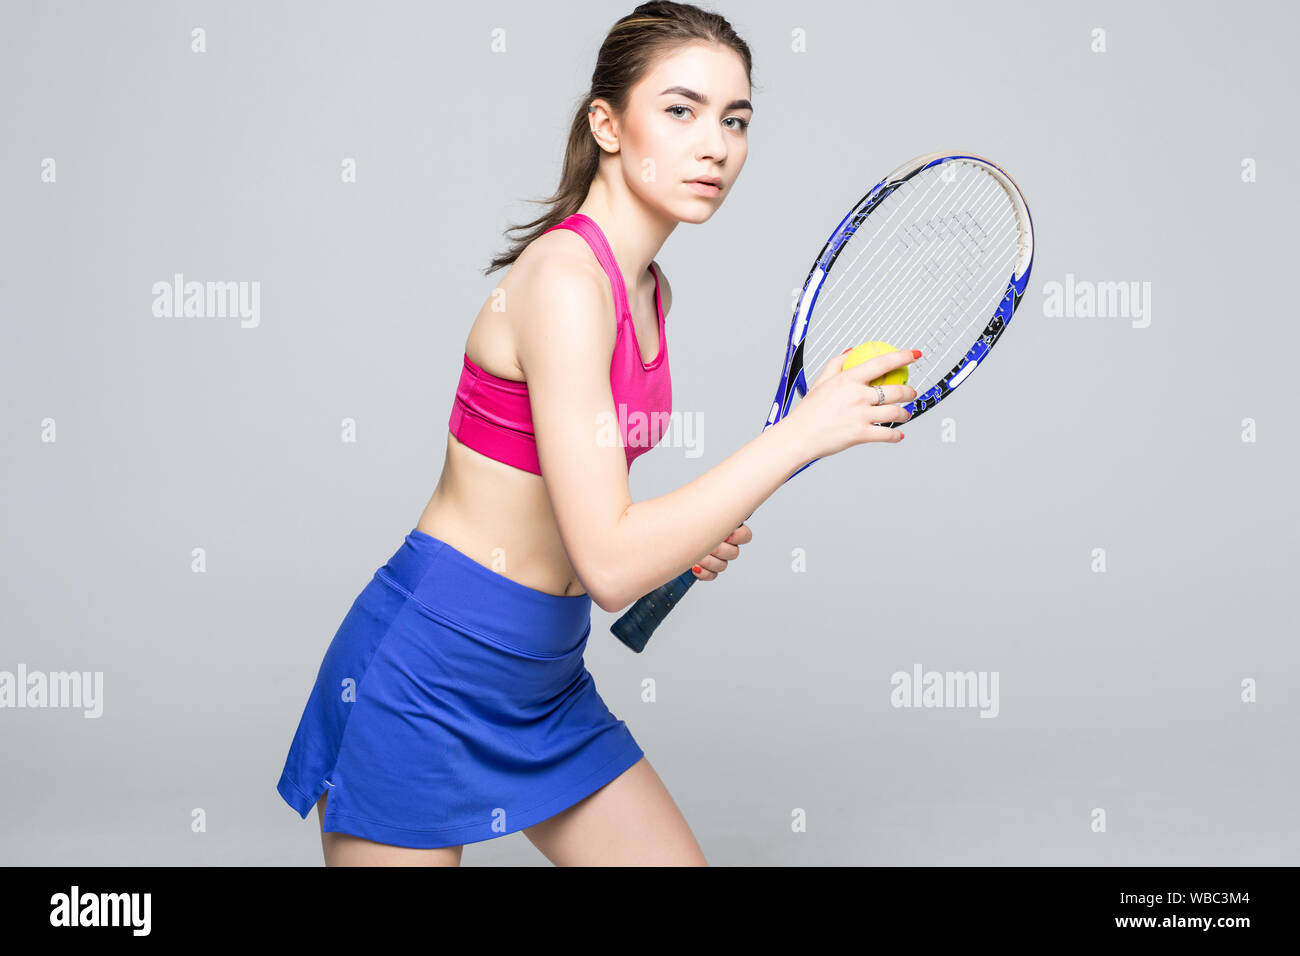 Full length portrait of female tennis player serving ball Stock Photo